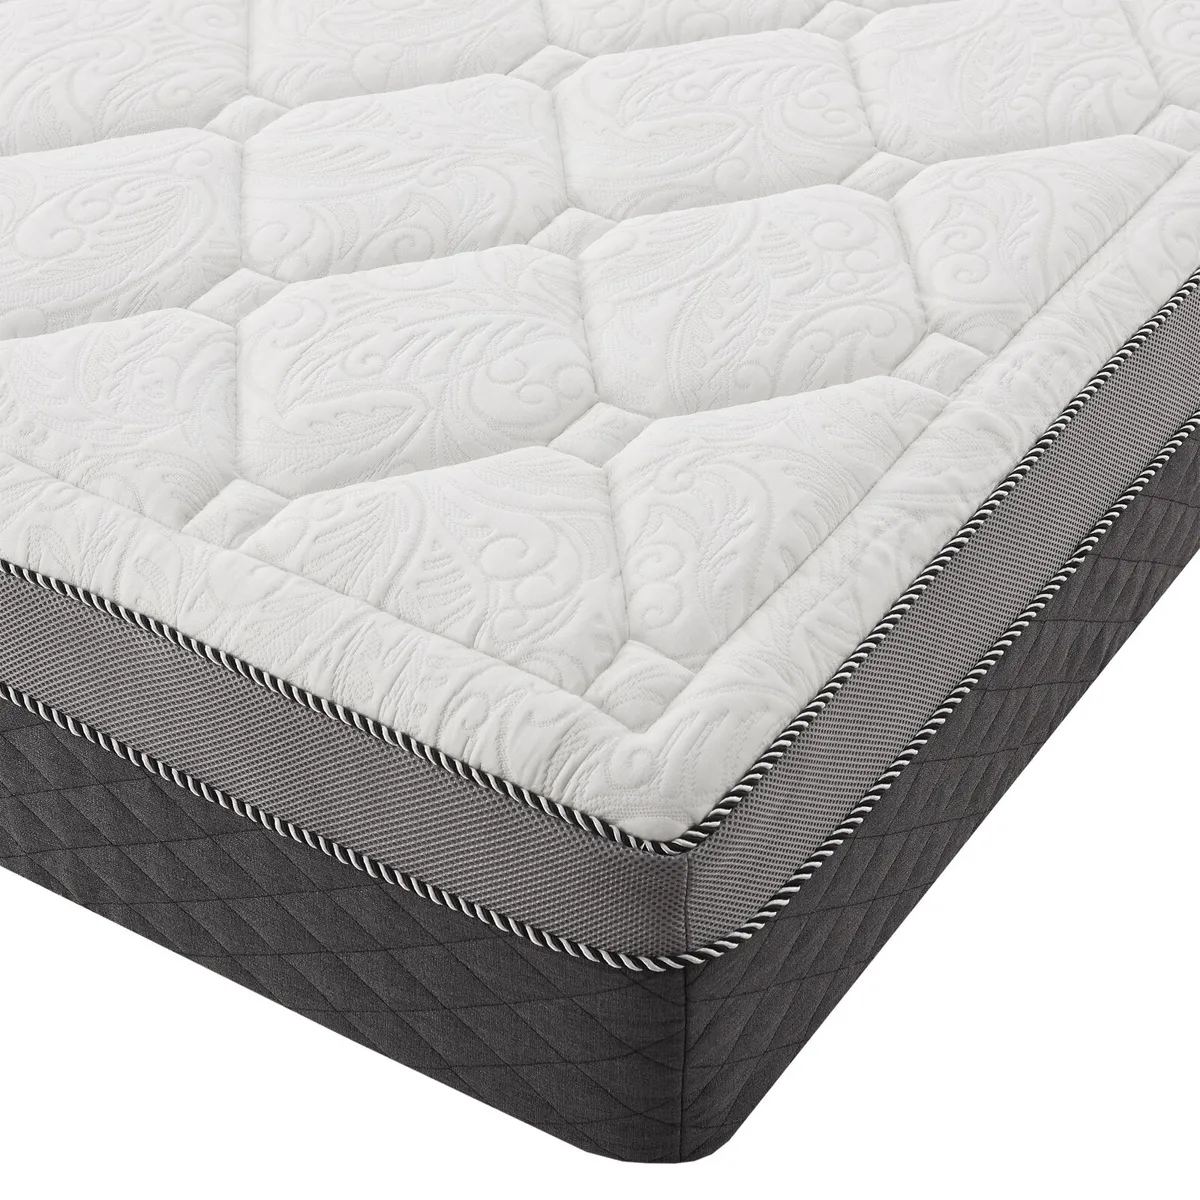 Visco plus mattress - Image 1